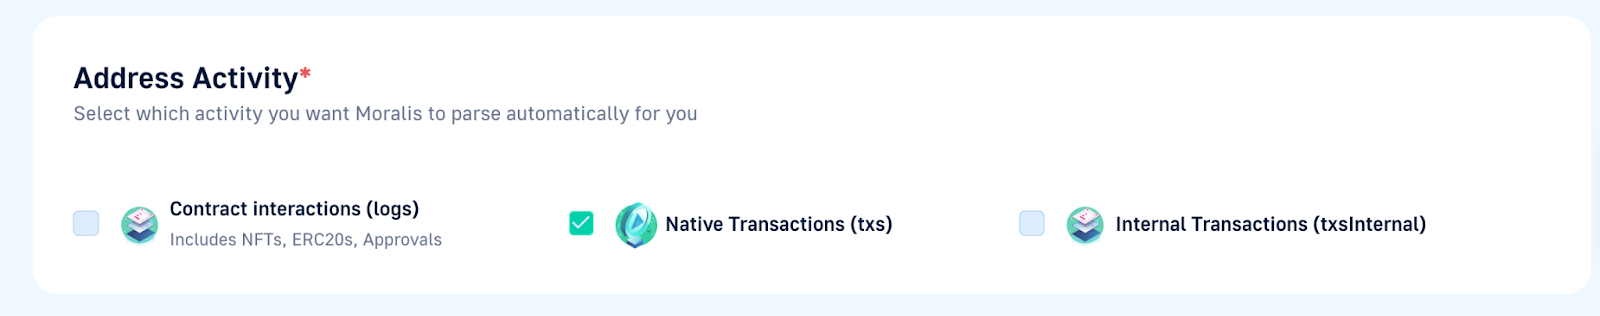 User checks the Native Transactions box.